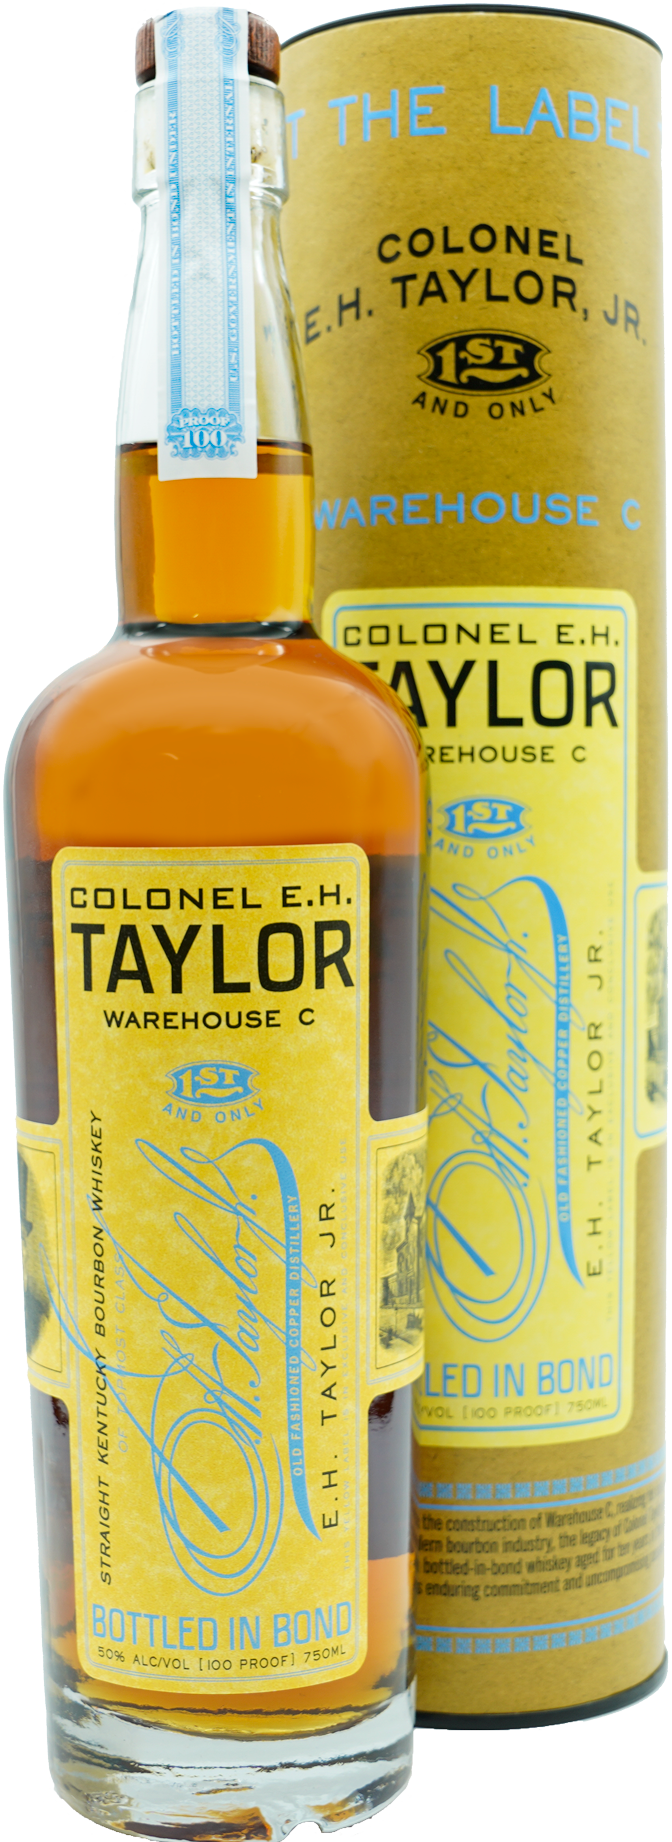 Colonel E. H. Taylor Warehouse C Kentucky Straight Bourbon Whiskey 750ml